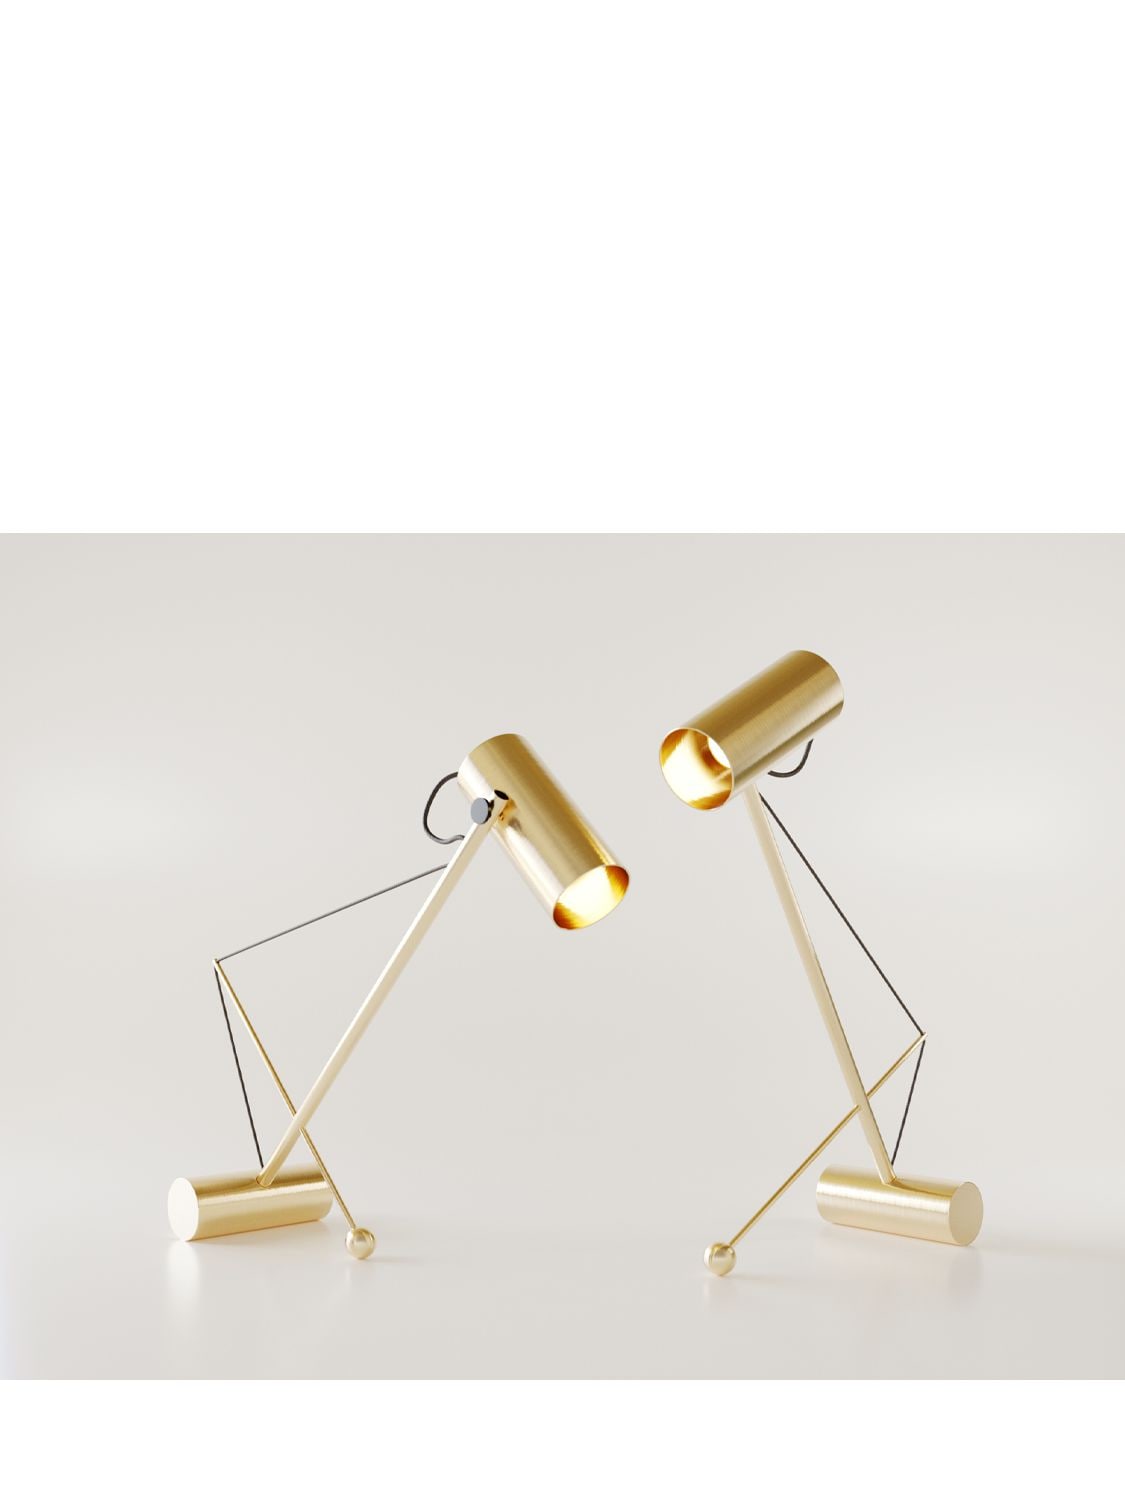 Shop Edizioni Ed049 Table Lamp In Gold